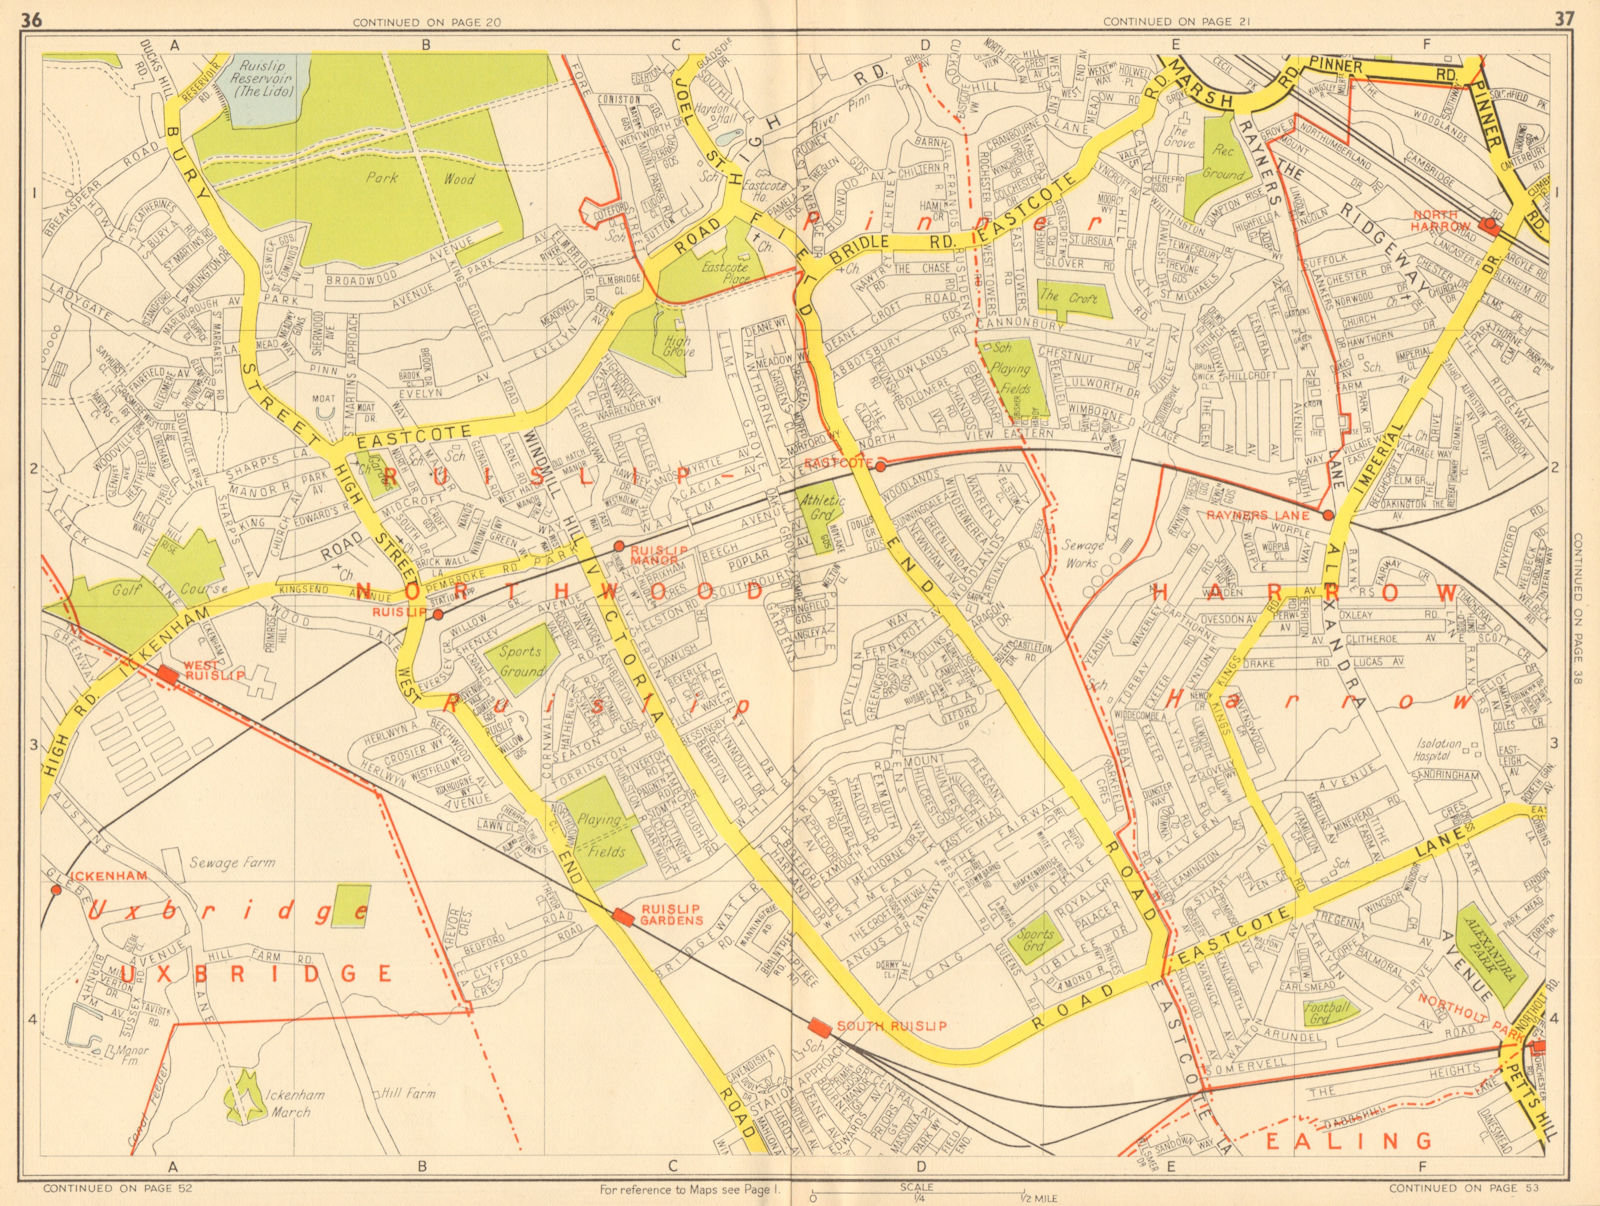 RUISLIP Harrow Pinner Ickenham Rayner's Lane Eastcote. GEOGRAPHERS' A-Z 1948 map